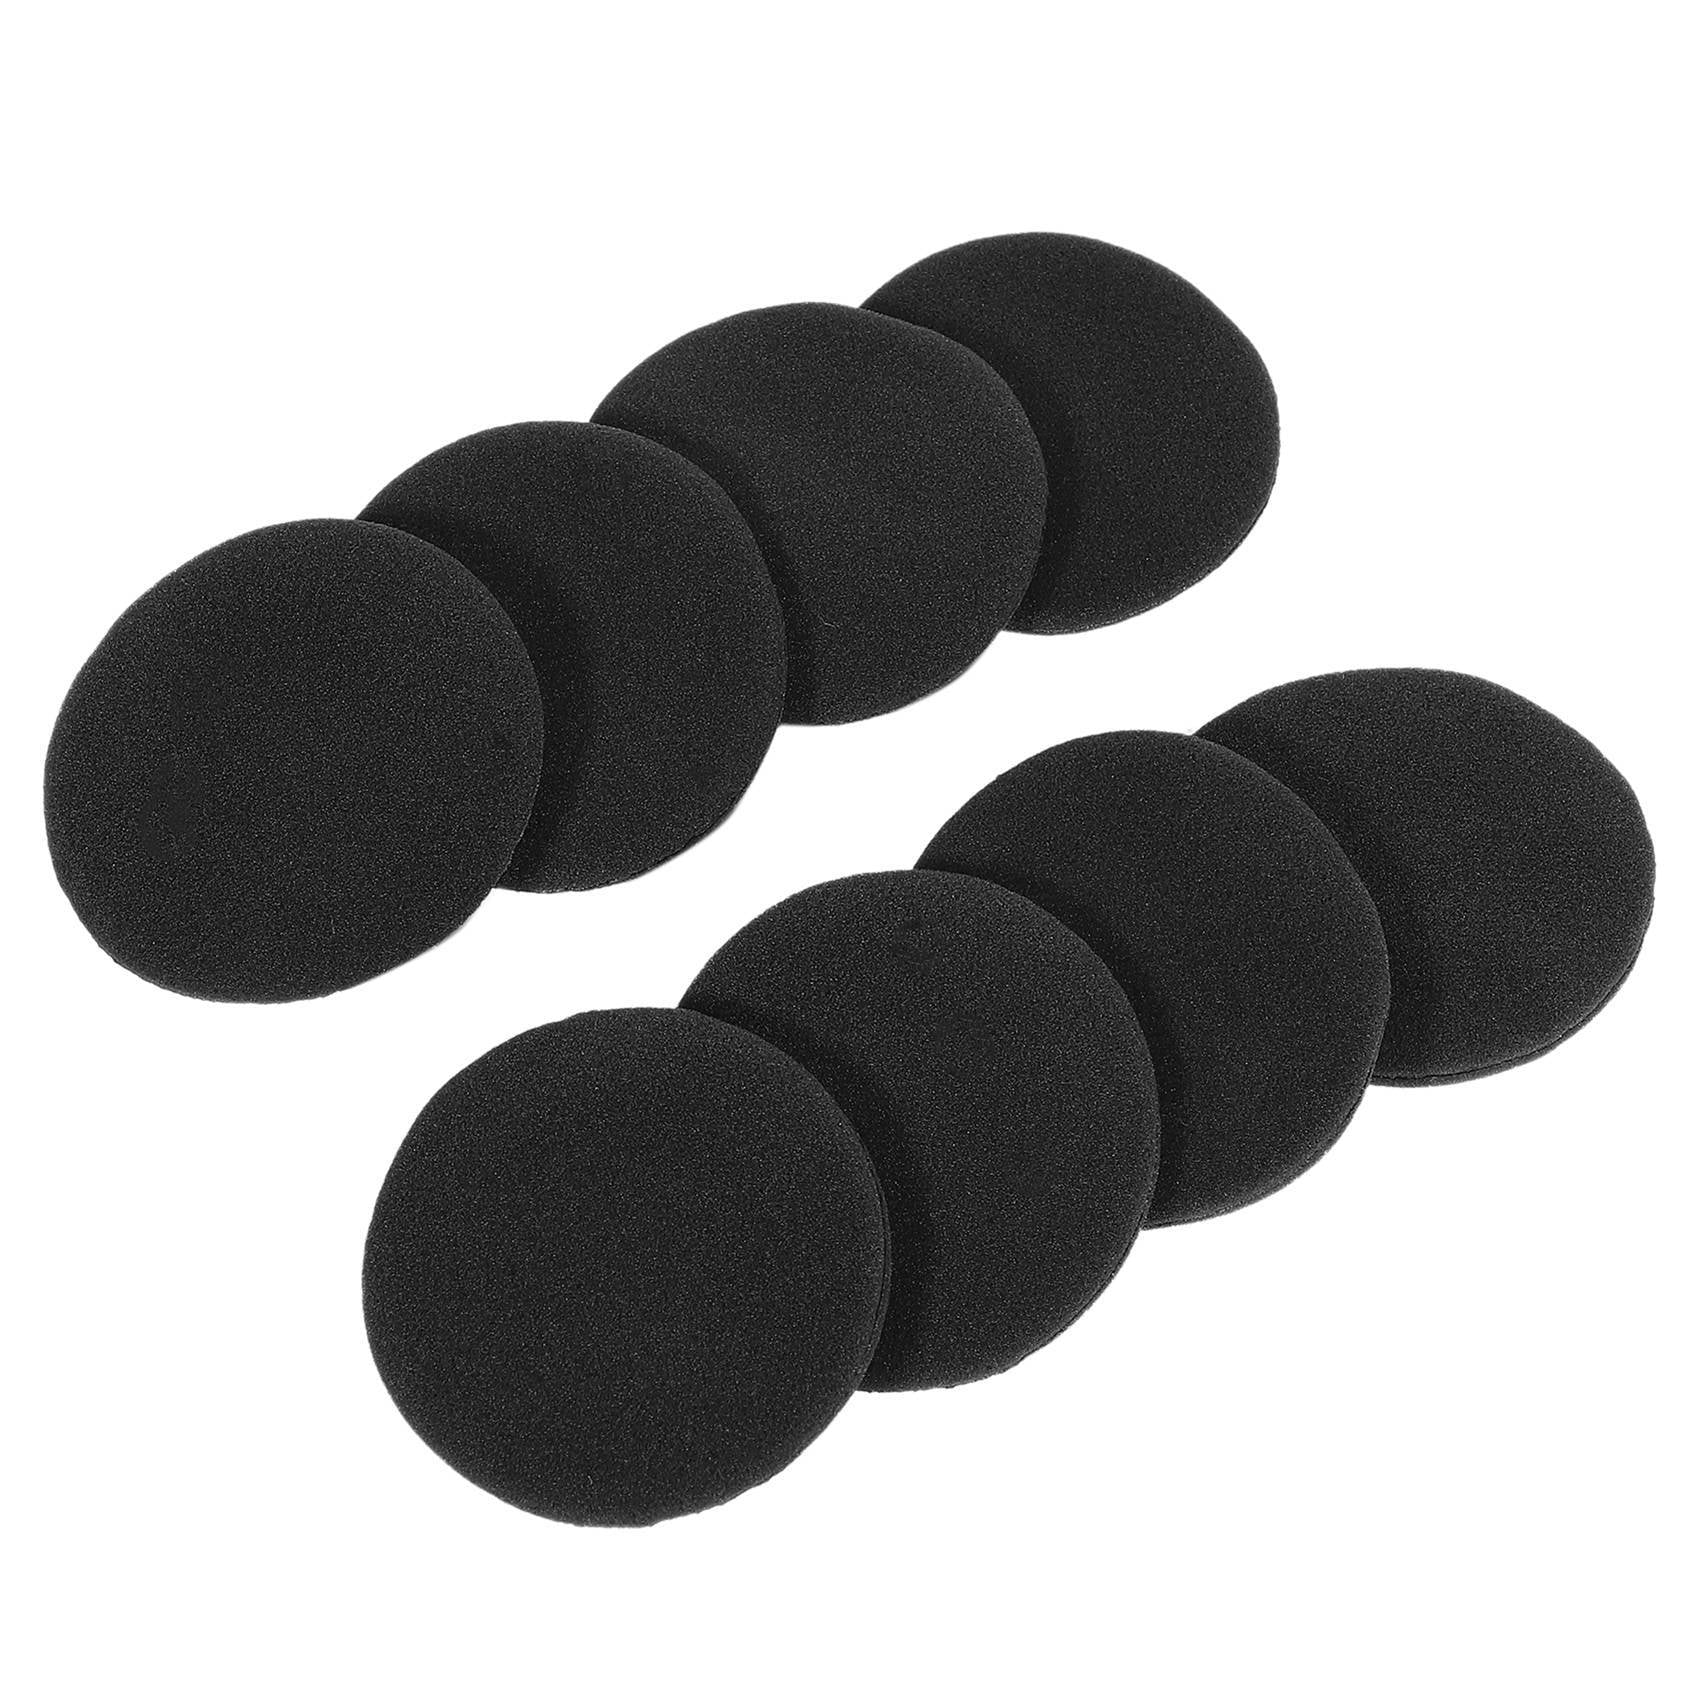 4 Pair 60mm Replacement Ear Foam Earphone Pad Covers for Headphone Black J8R1